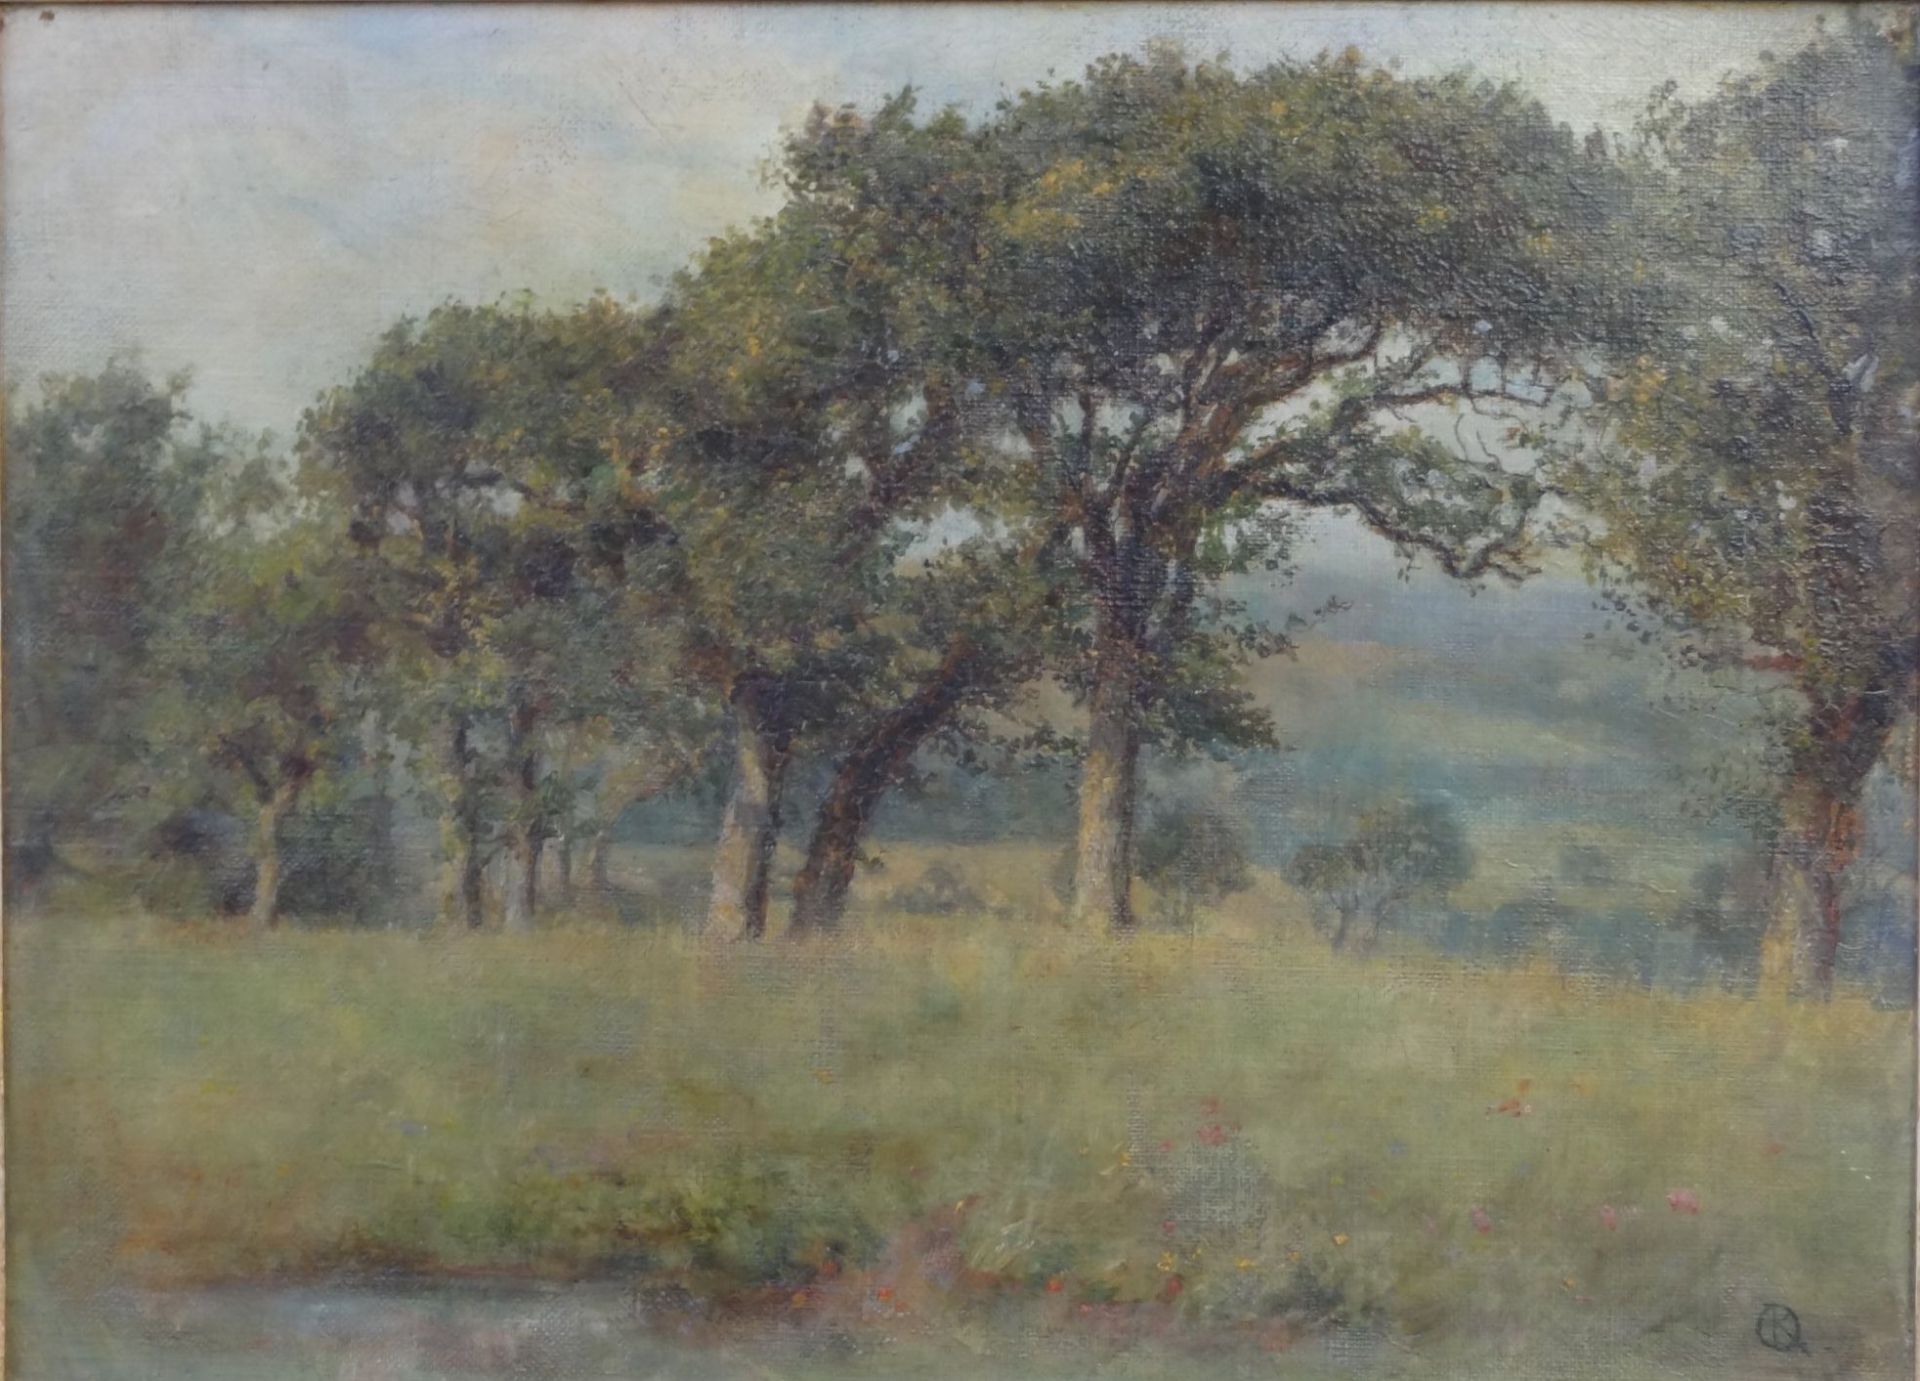 OR Monogrammiert "Bäume am Feldrand" Öl/Malfaser um 1900, 28x36 cm, breiter Goldrahmen, RG